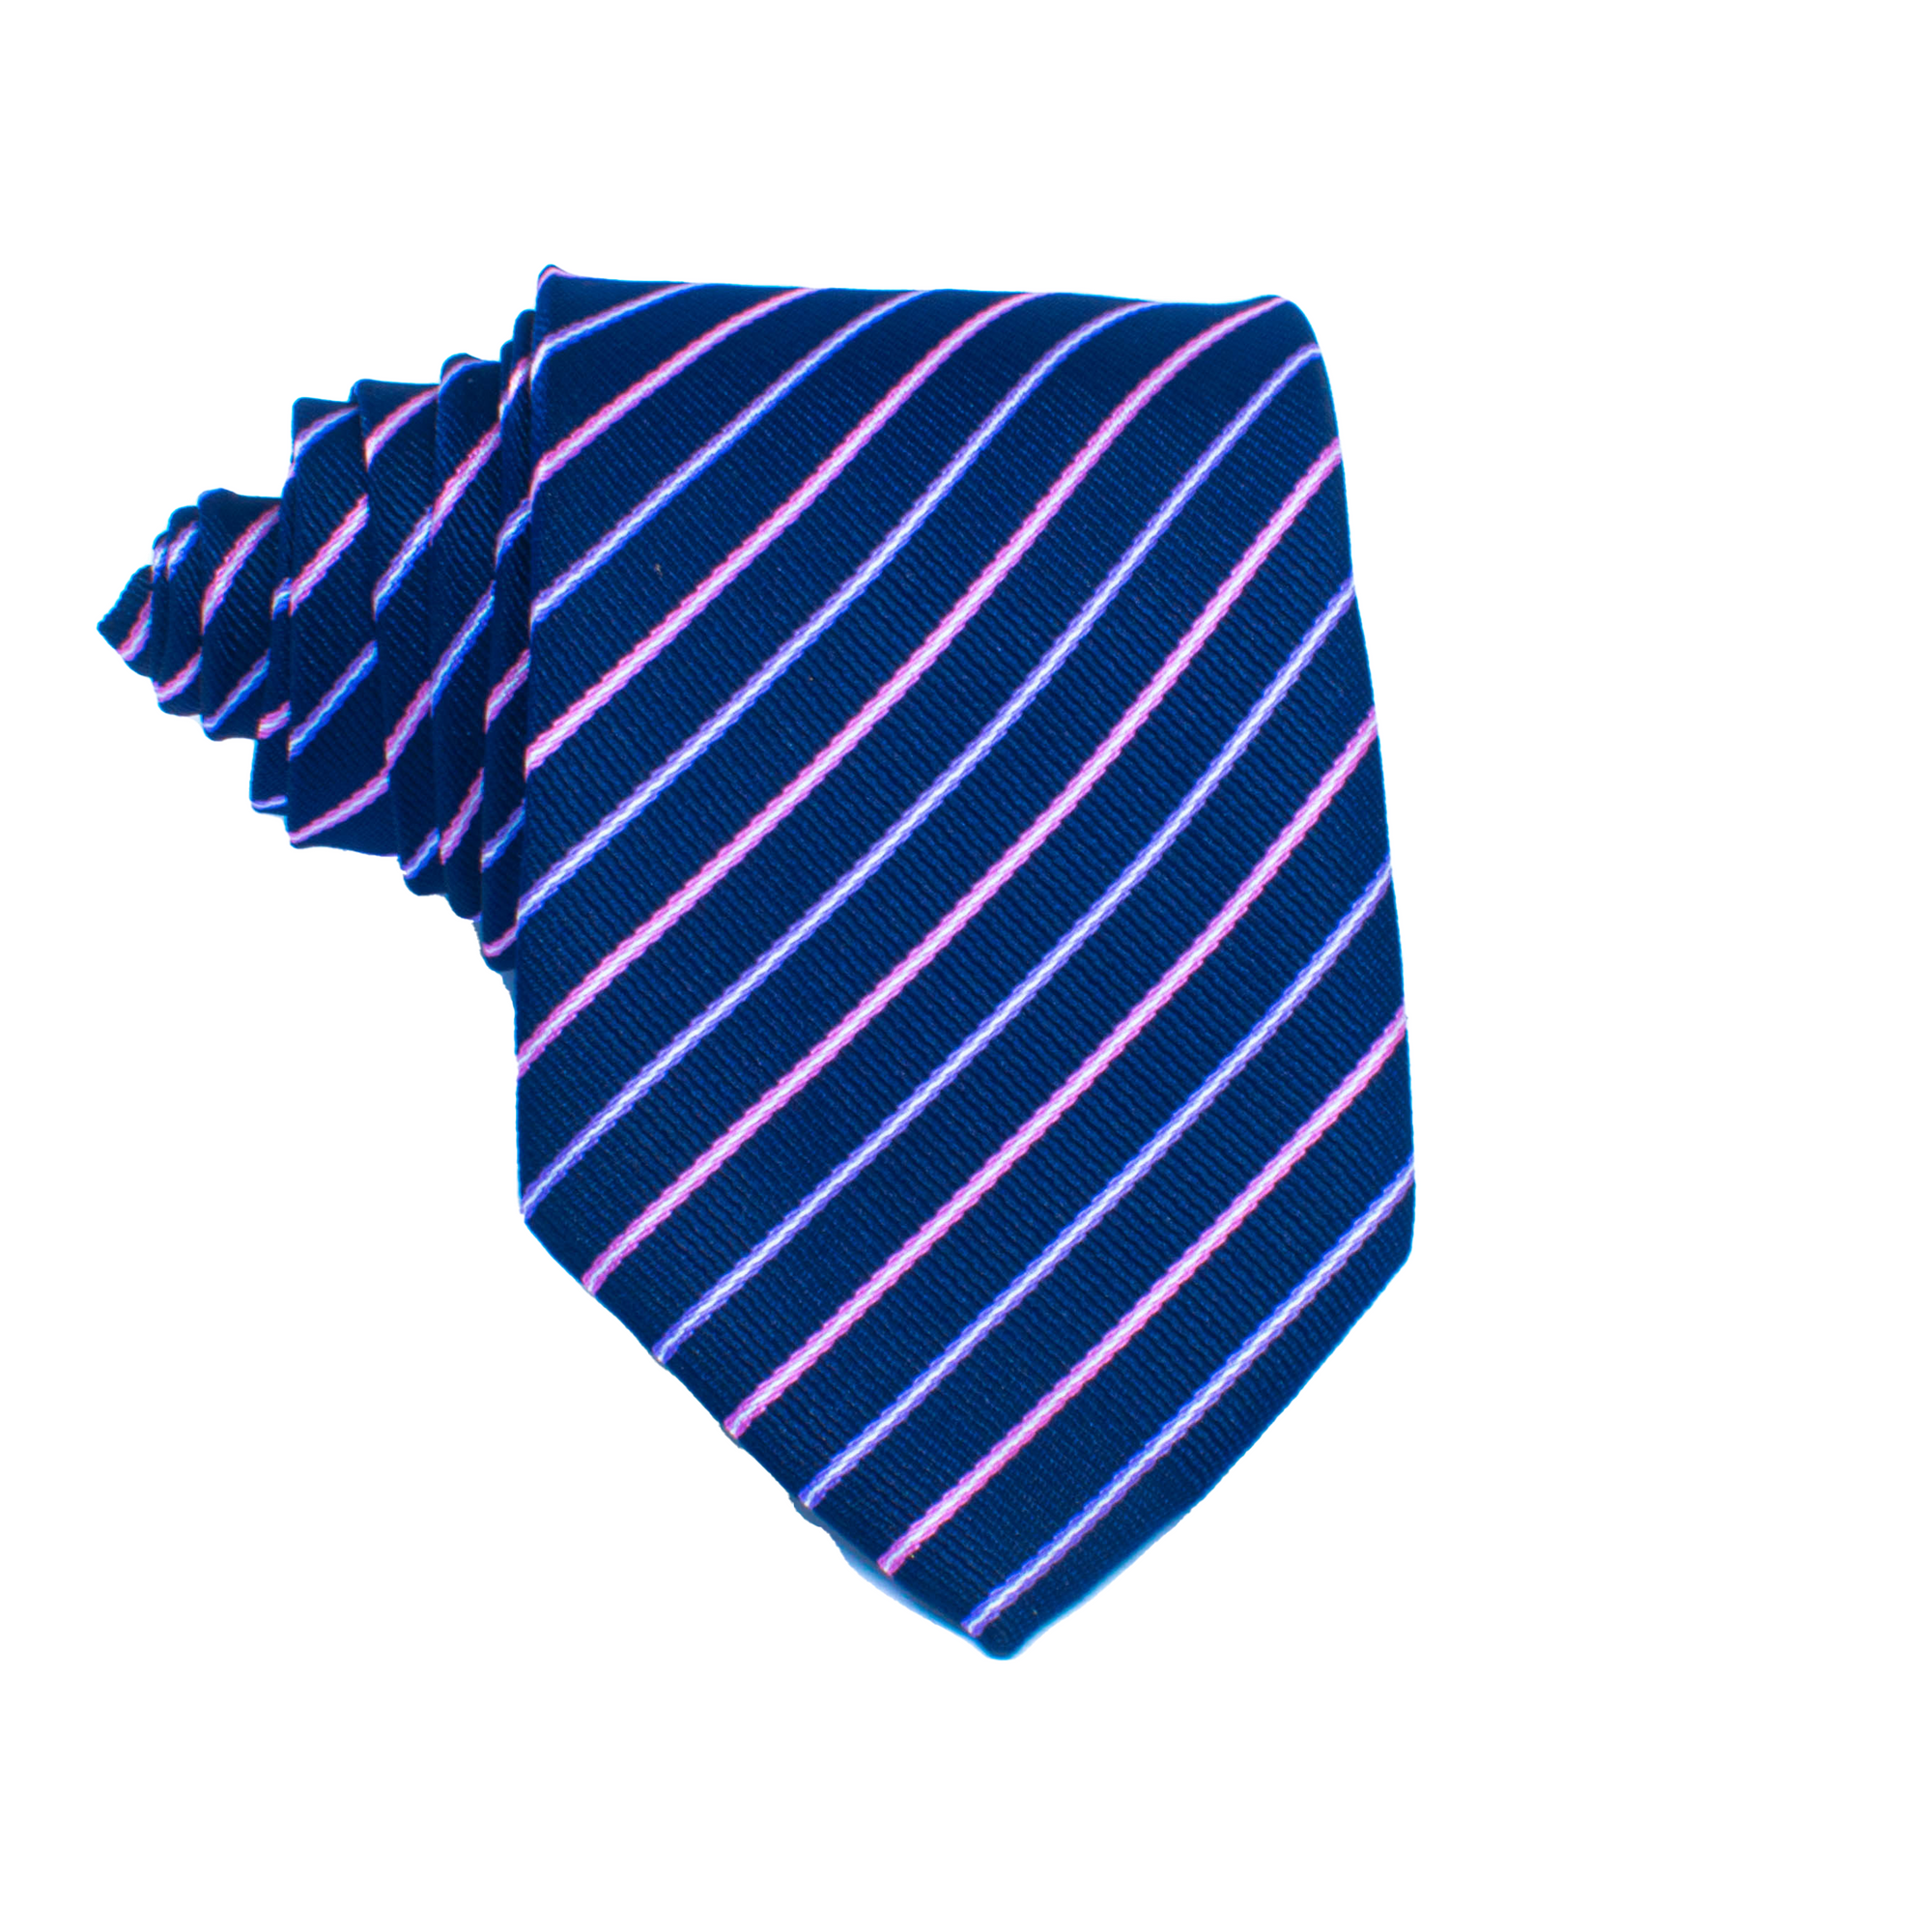 Mens Neck Tie - Navy With Violet Stripes